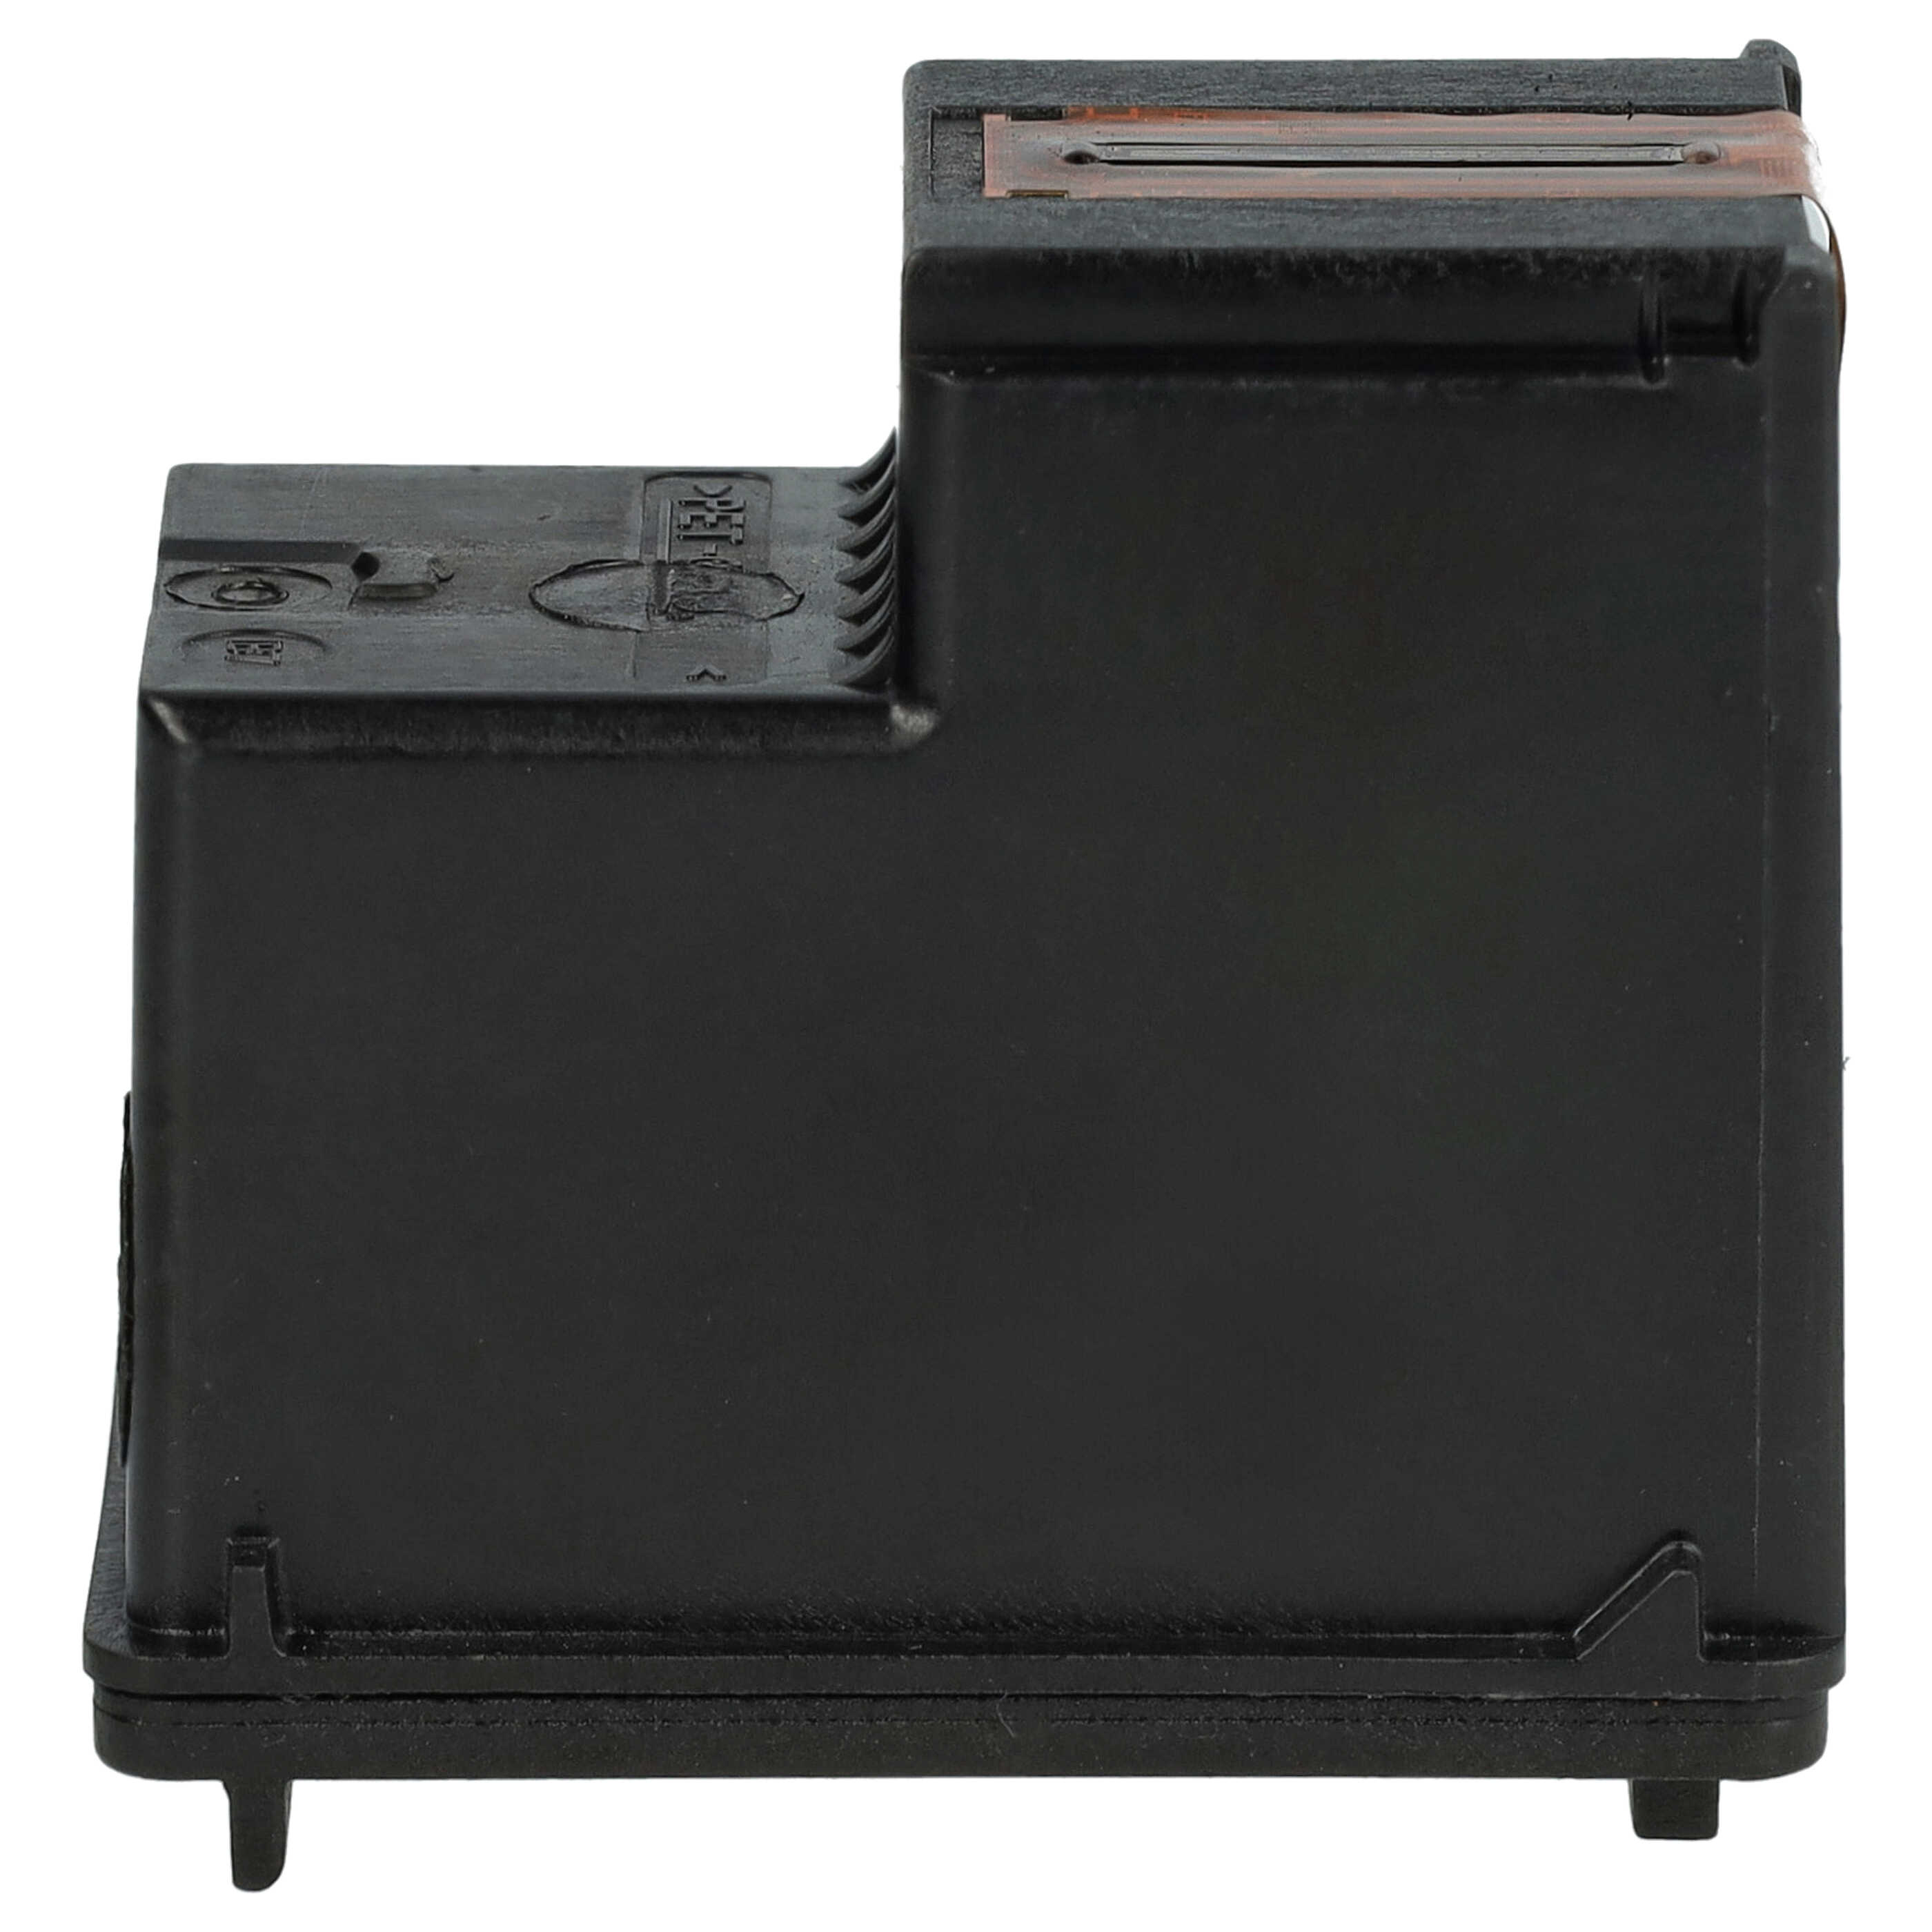 Cartucho tinta para impresora Officejet HP - negro rellenado 18 ml